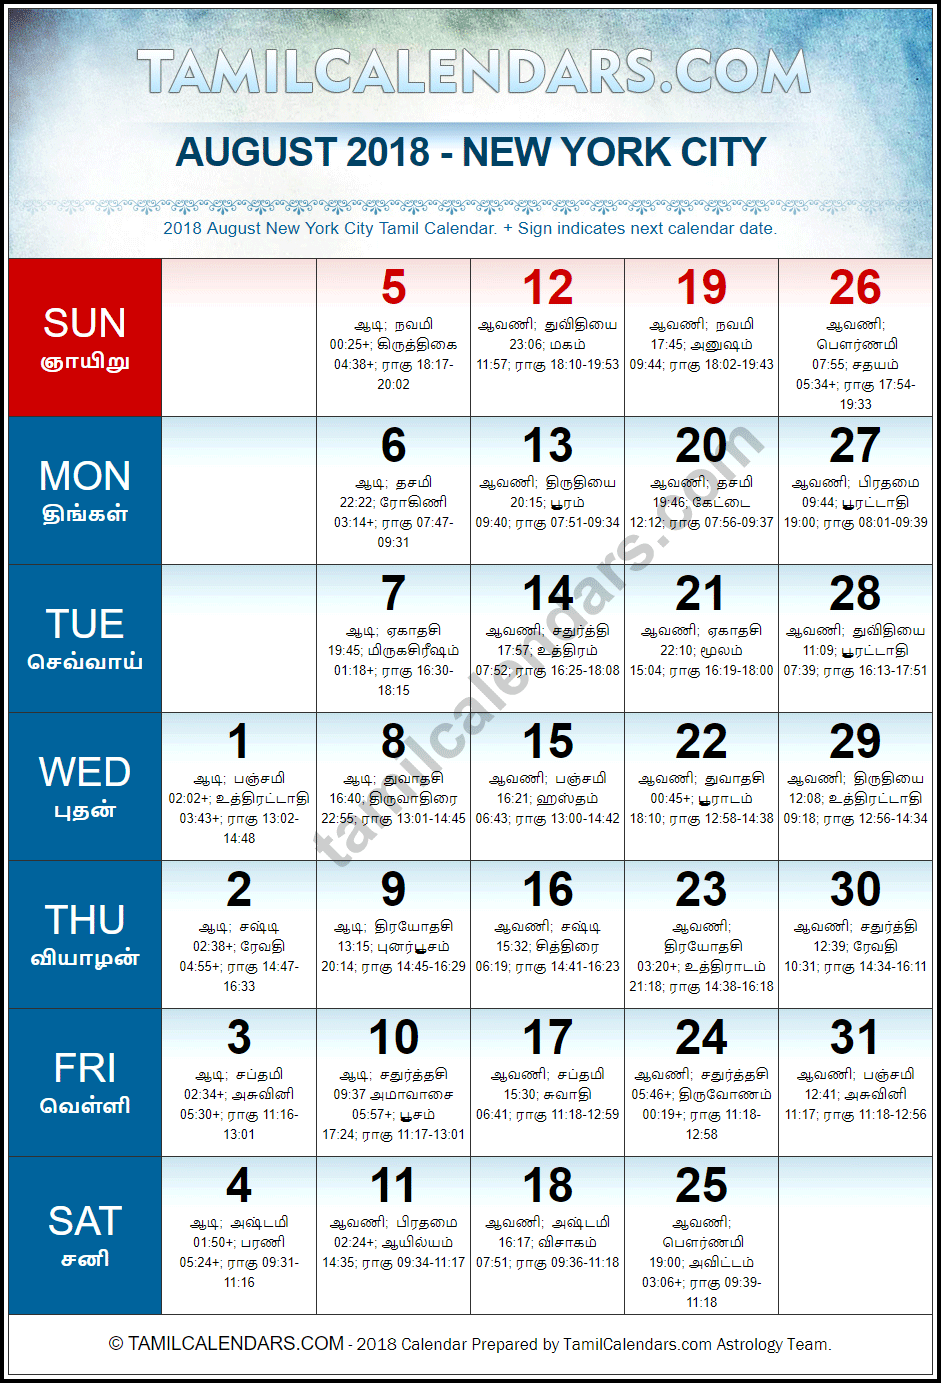 August 2018 Tamil Calendar for New York, USA